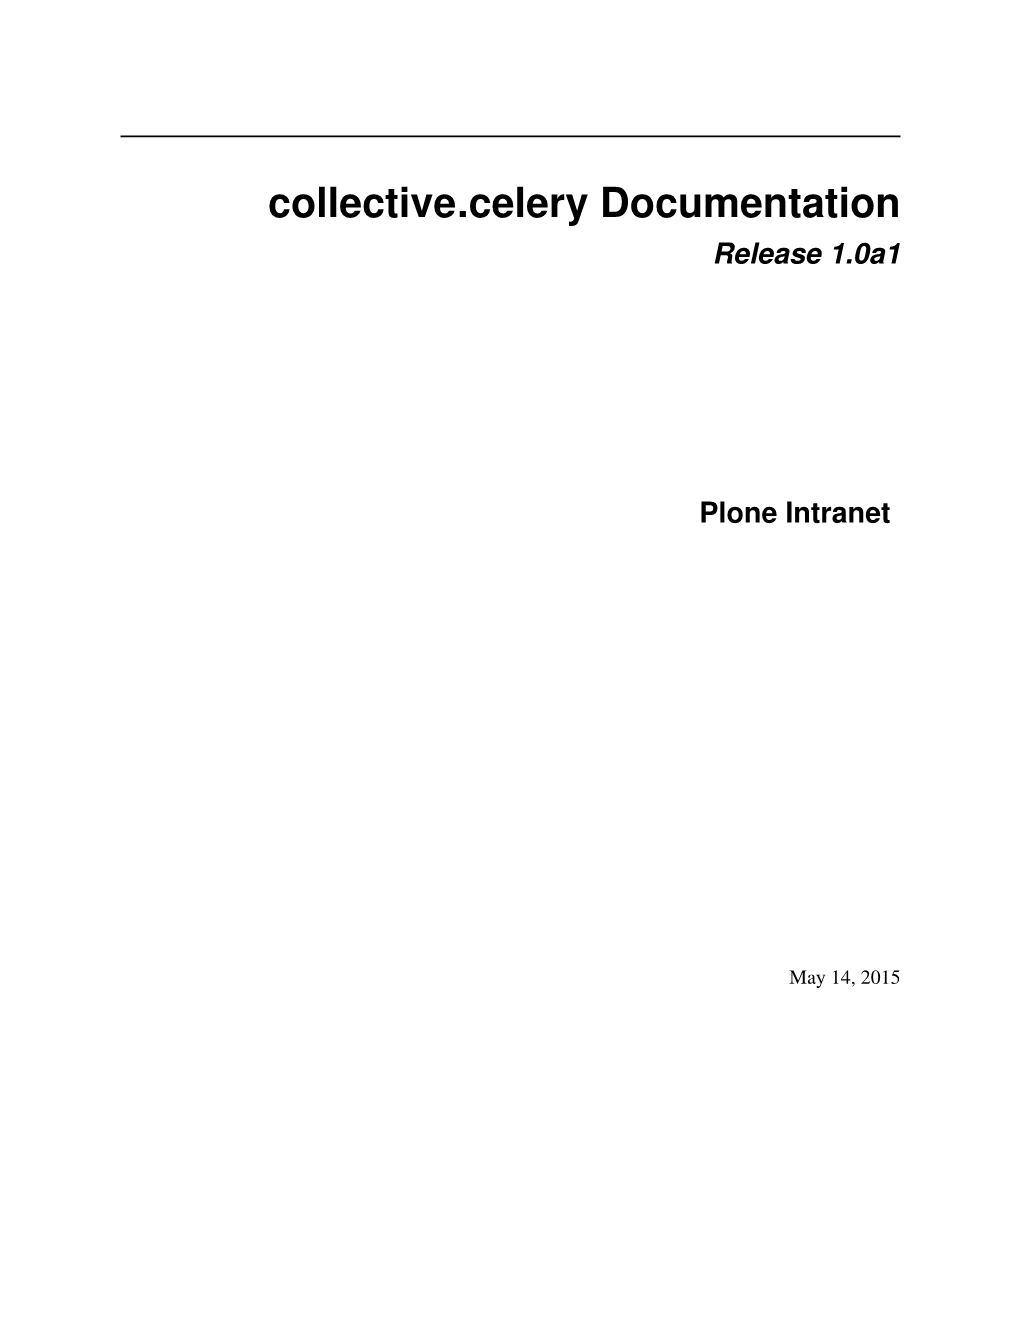 Collective.Celery Documentation Release 1.0A1